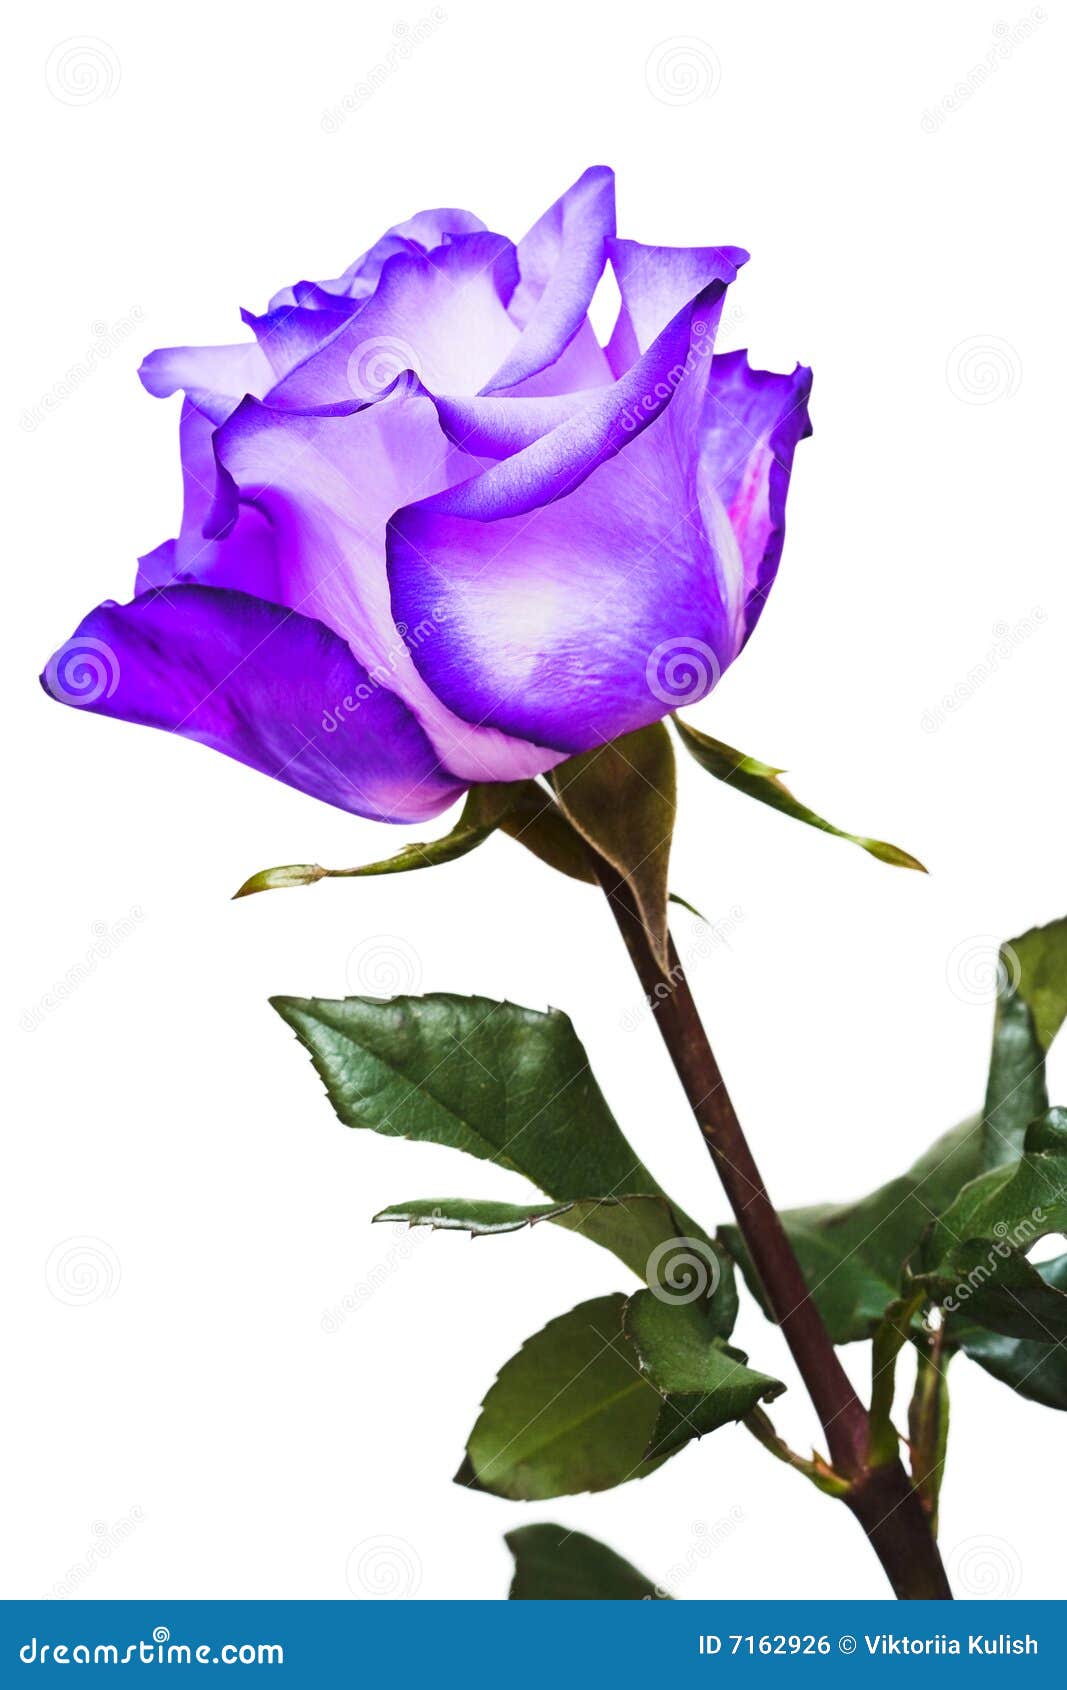 Violet rose stock photo. Image of beautiful, decoration - 7162926